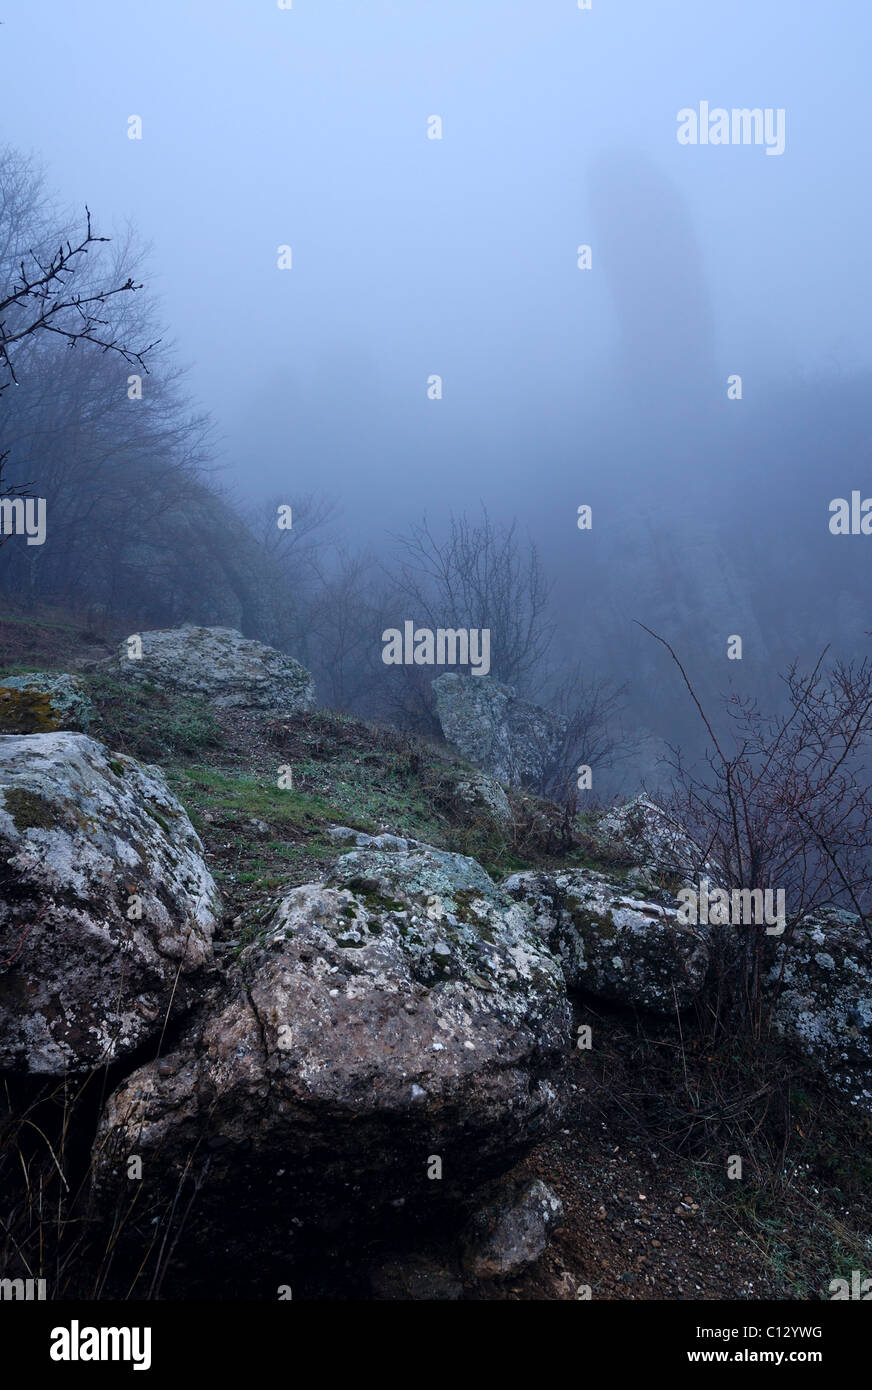 southern demergi mountain landscape on crimea covered in fog Stock Photo